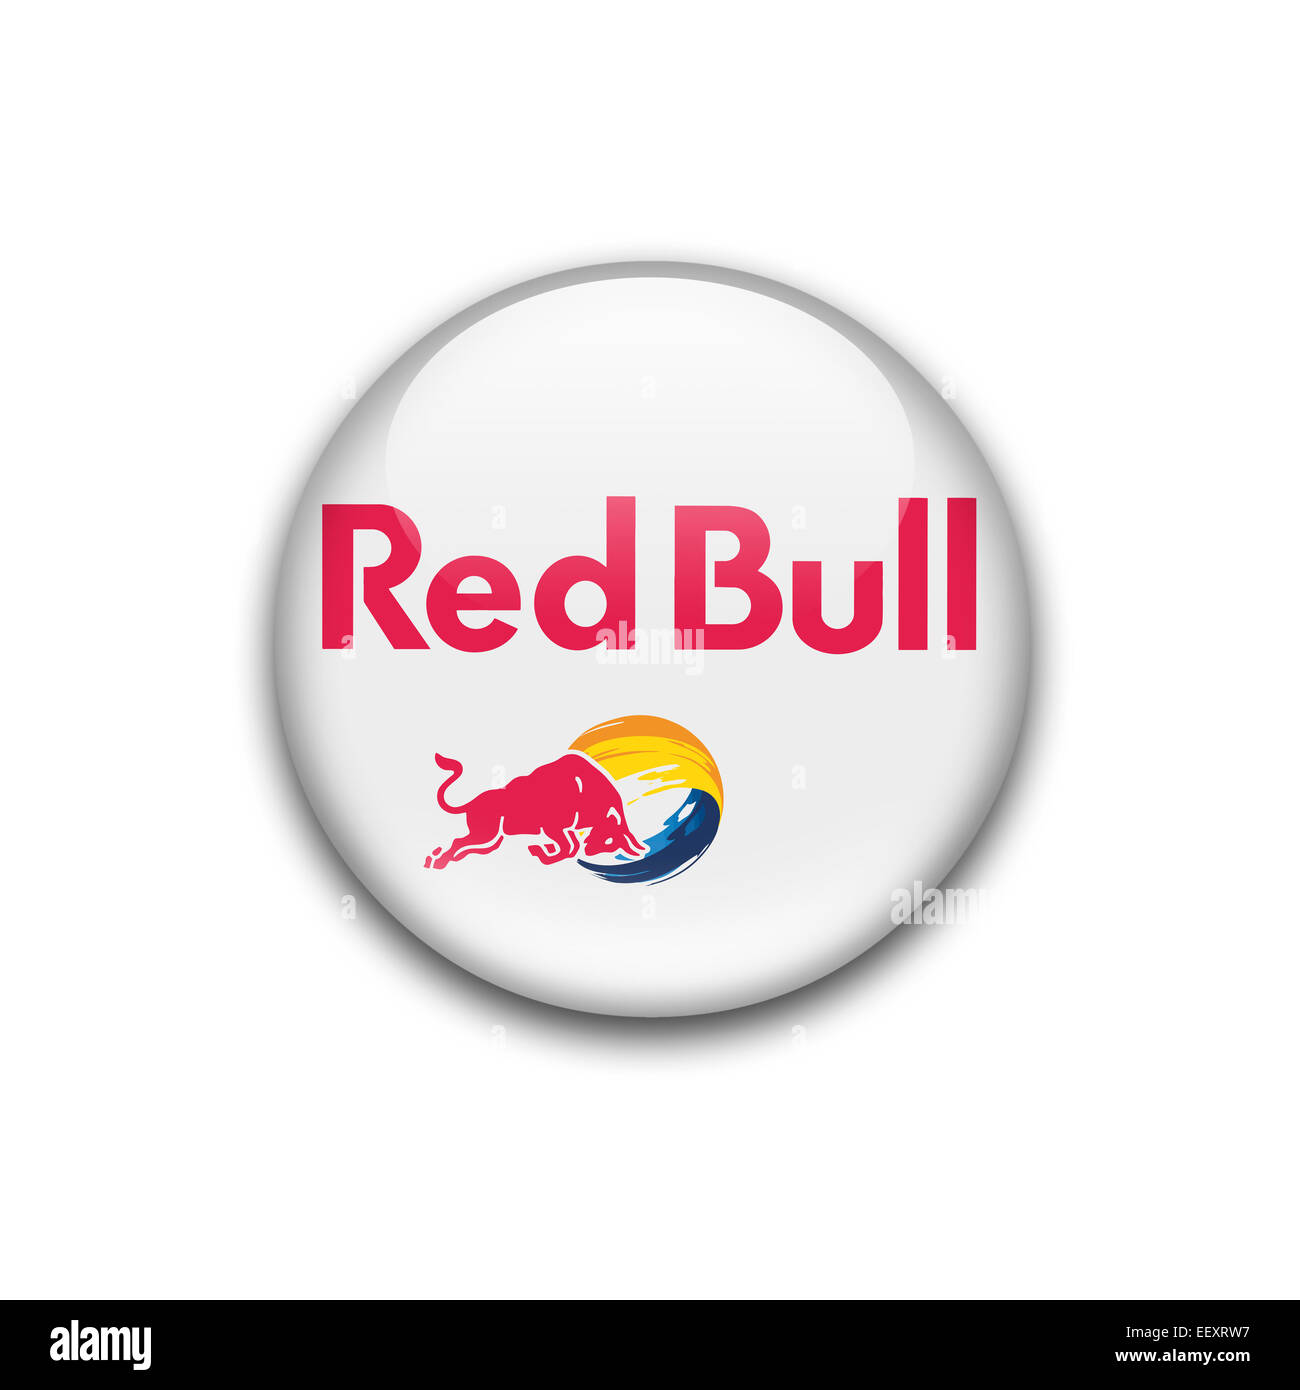 Red Bull Redbull Icono Simbolo Emblema Distintivo Logo Fotografia De Stock Alamy